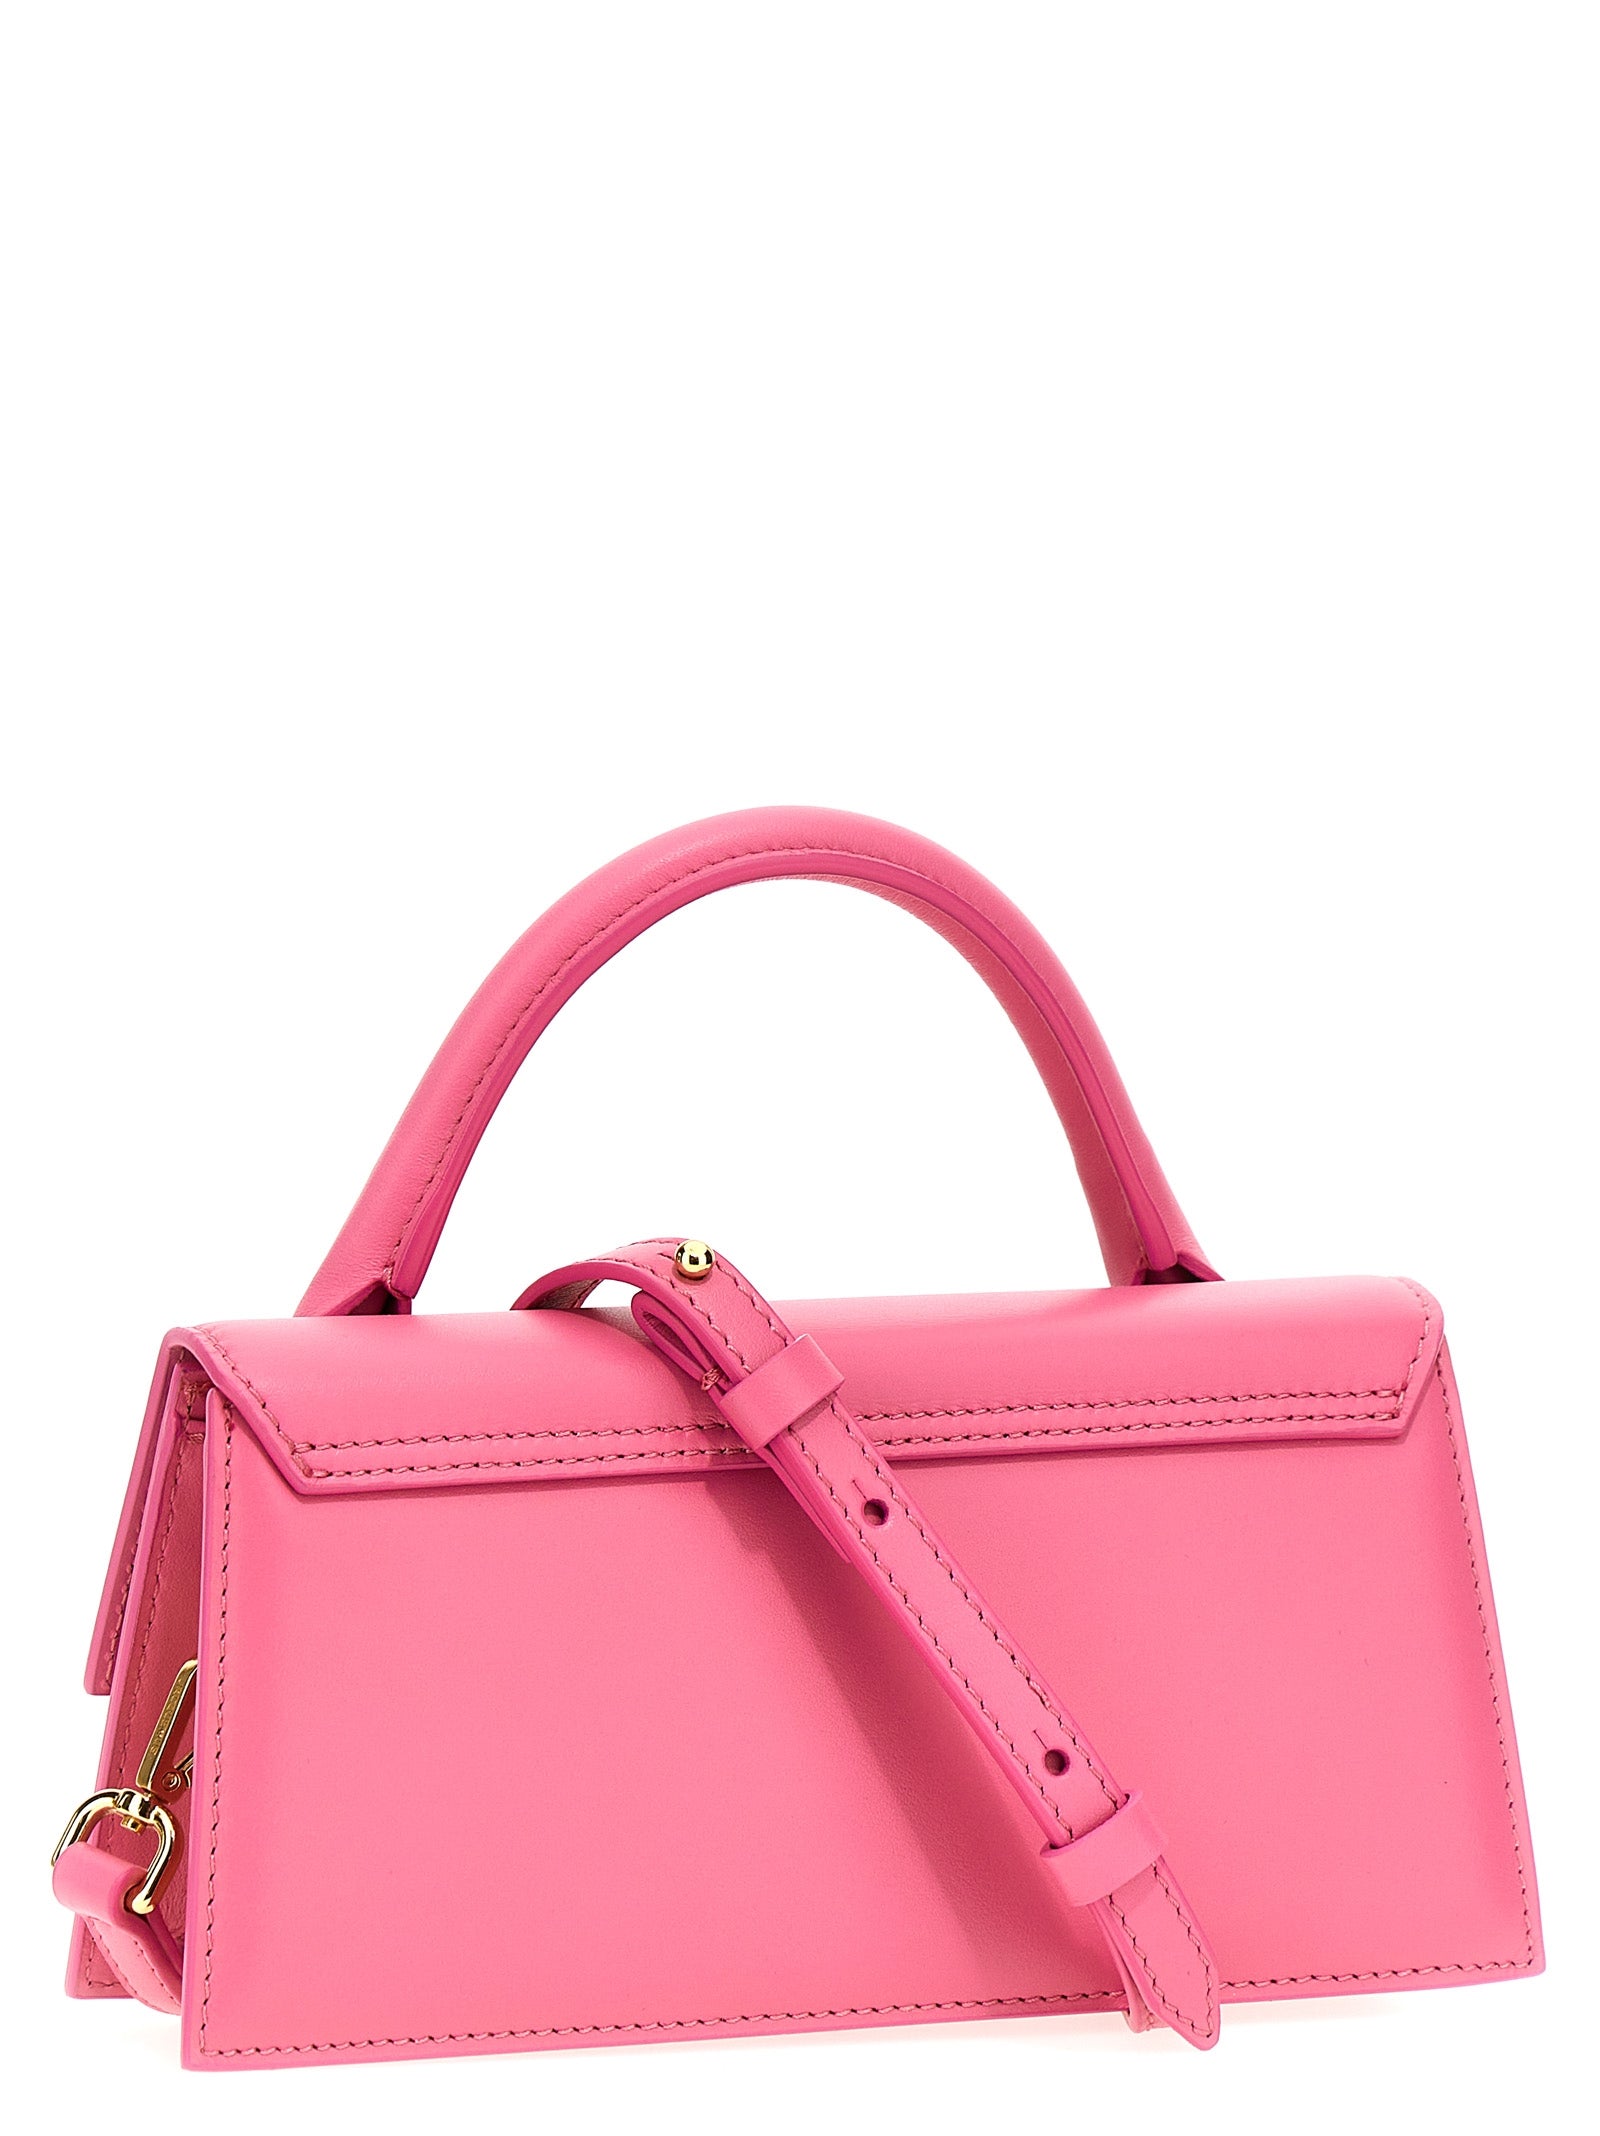 Shop Jacquemus Le Chiquito Long Hand Bags Pink